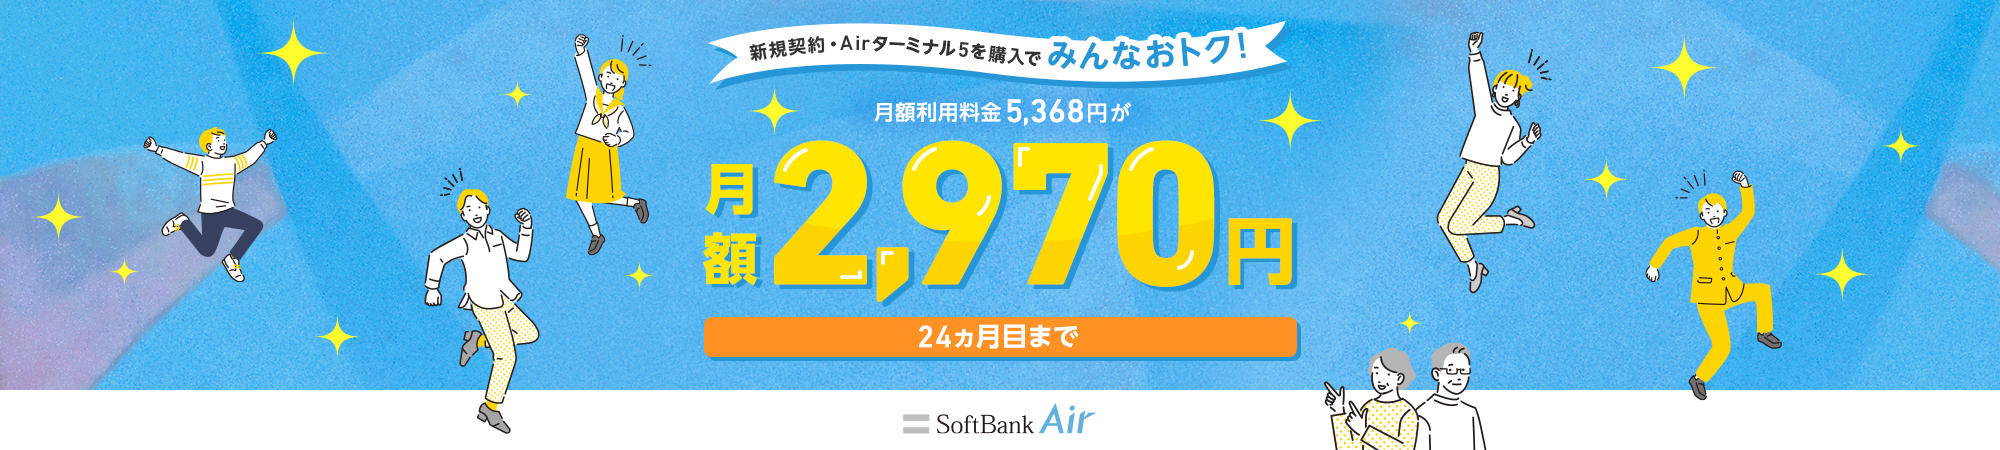 SoftBank Air 最新5Gモデル Airターミナル5 GoGoキャンペーン 月額基本料金5,368円が月額3,080円 12ヵ月間